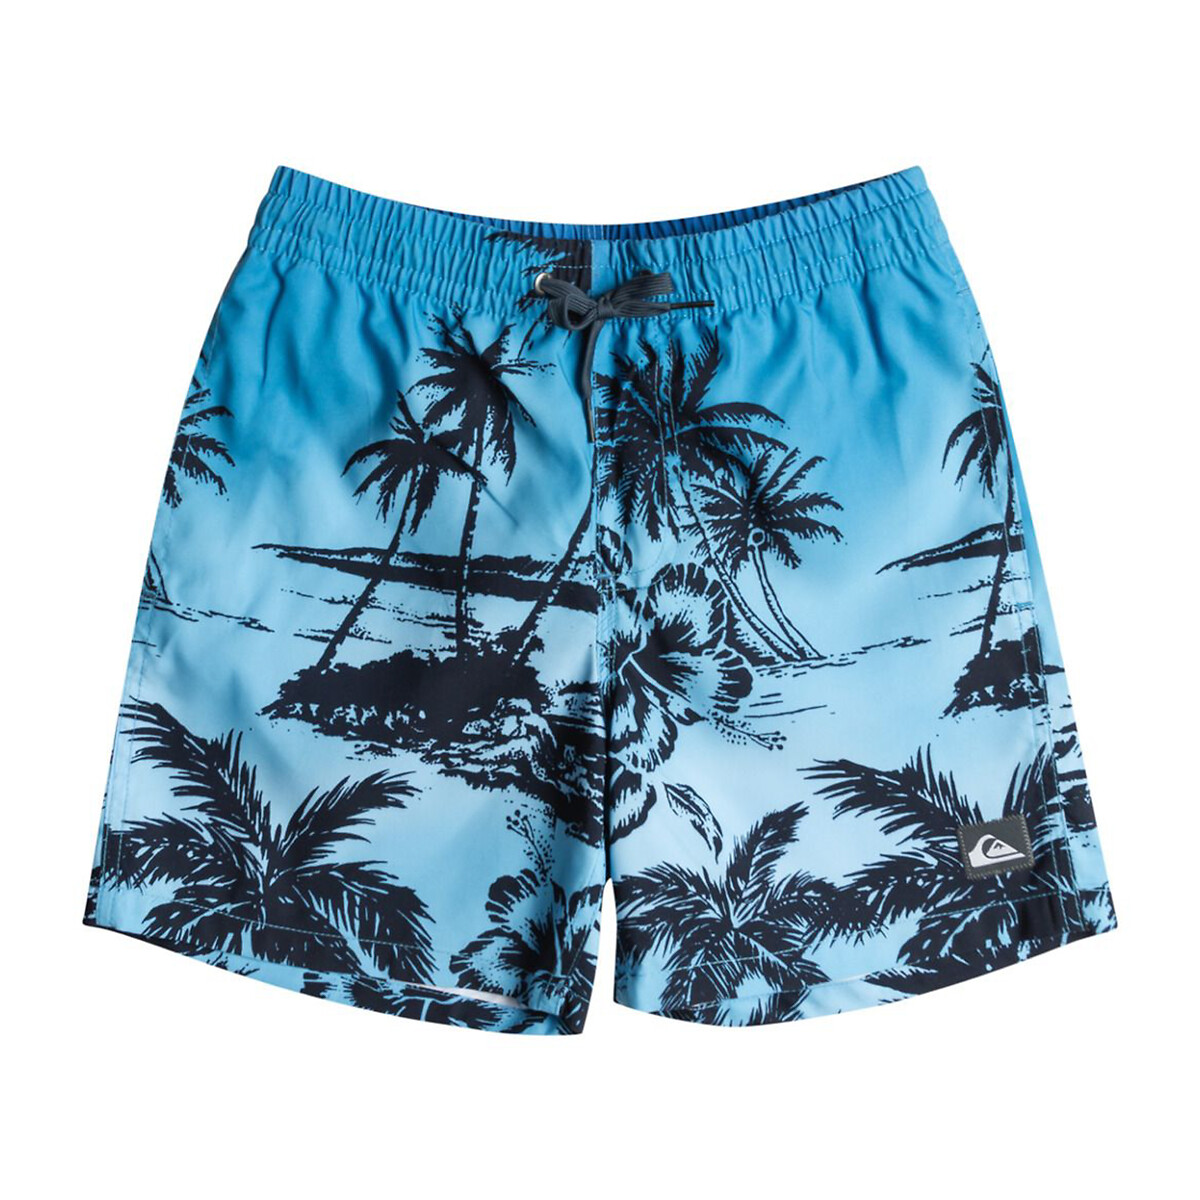 Image of Recycled Swim Shorts in Hawaiian Print